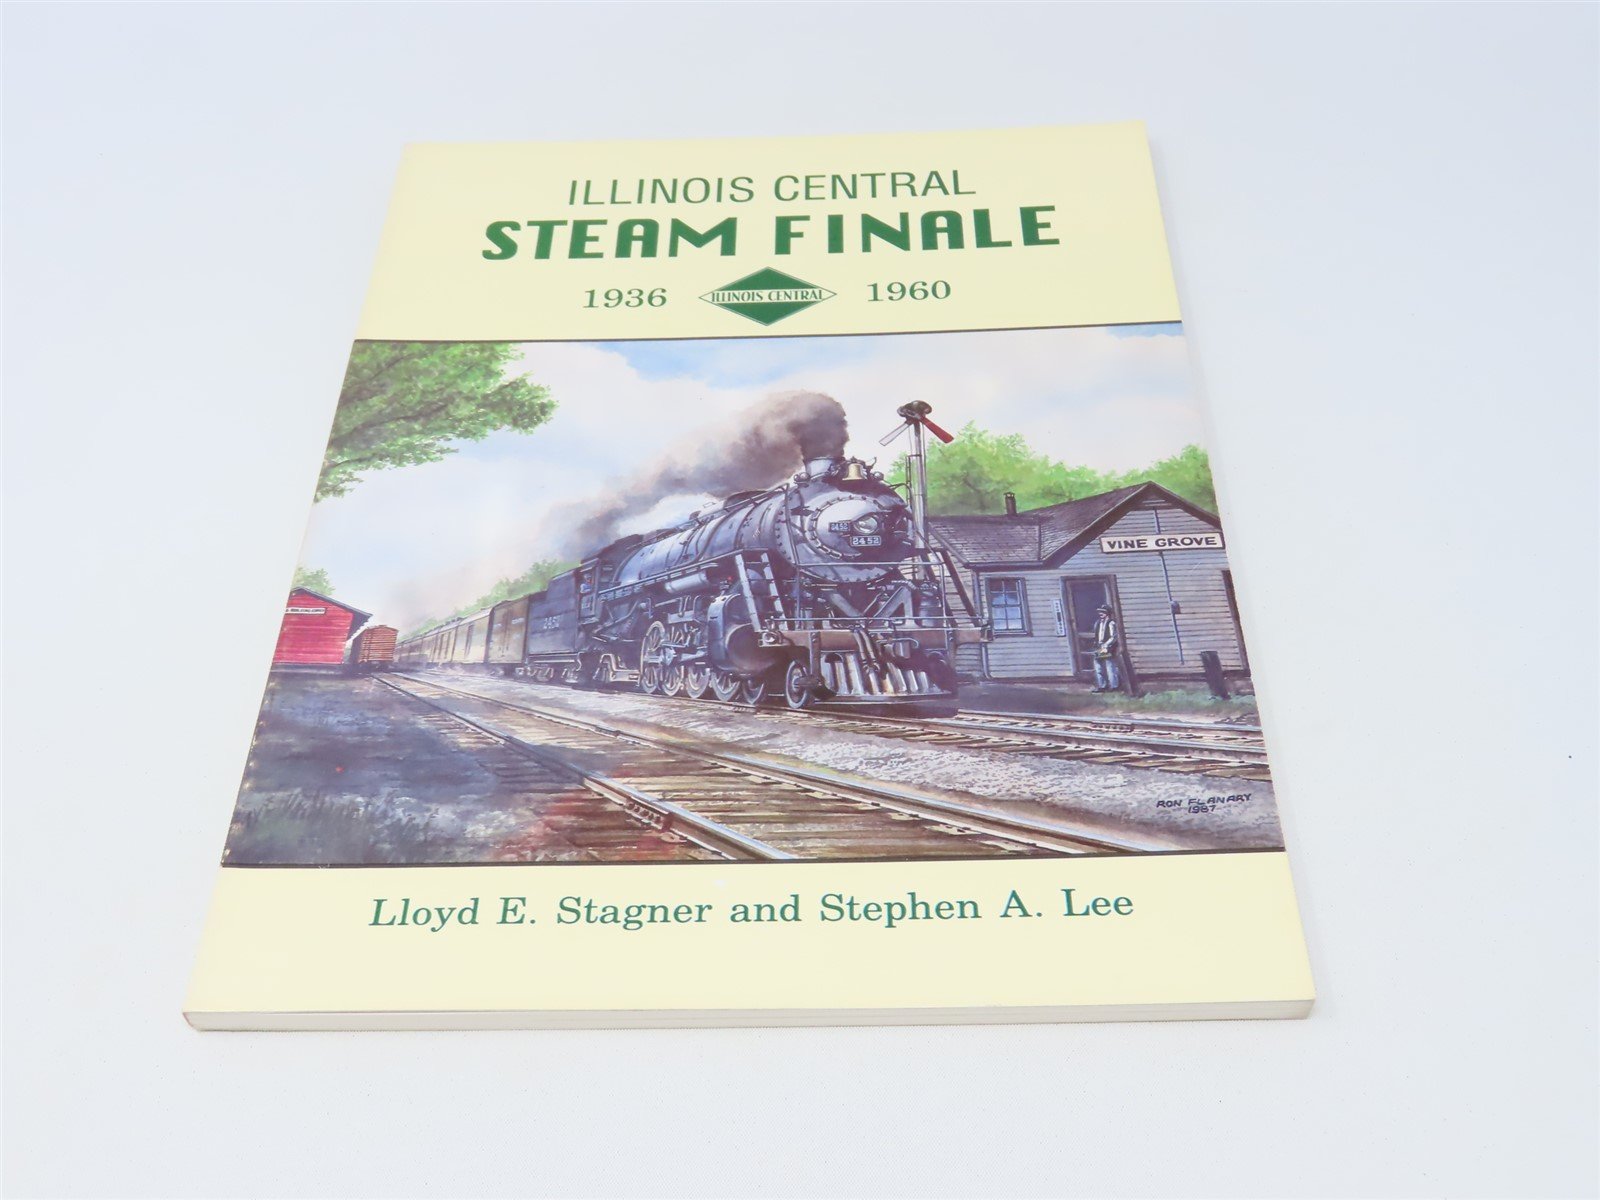 Illinois Central Steam Finale, 1936-1960 by Lloyd E Stagner ©1994 SC Book